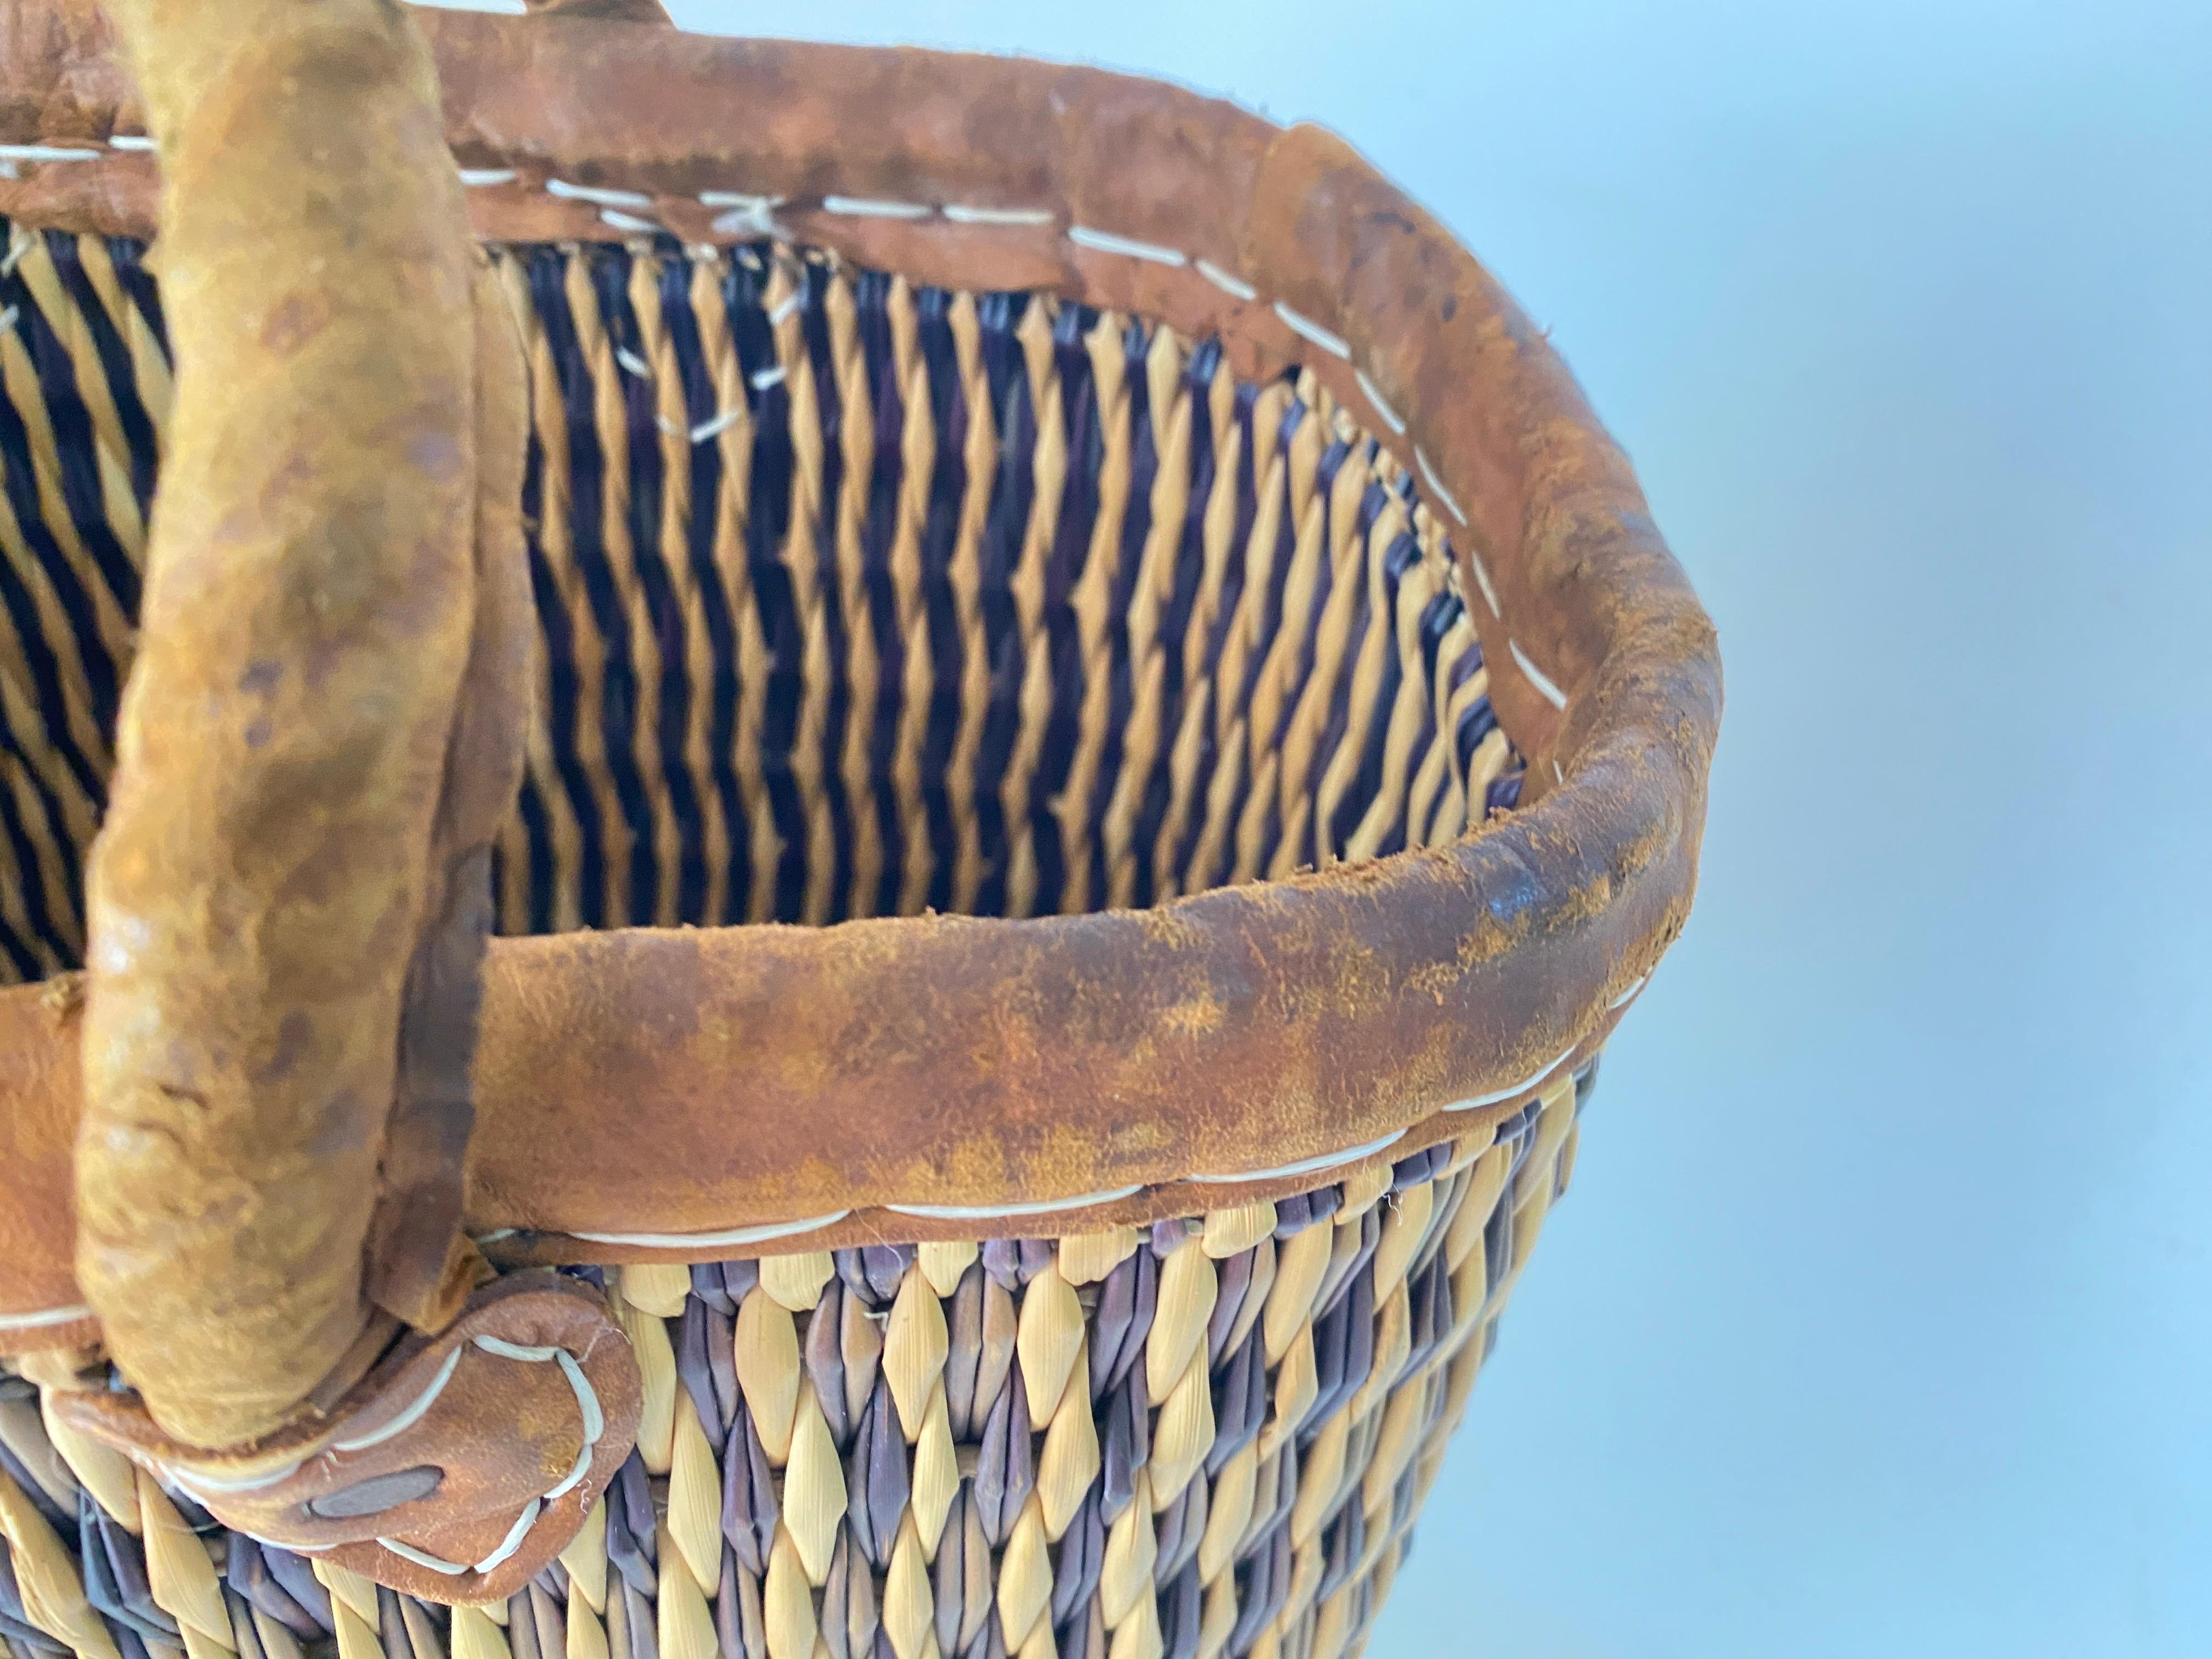 Vintage French Wicker Basket, Gold Color Stitched Leather Bag Handles France For Sale 5